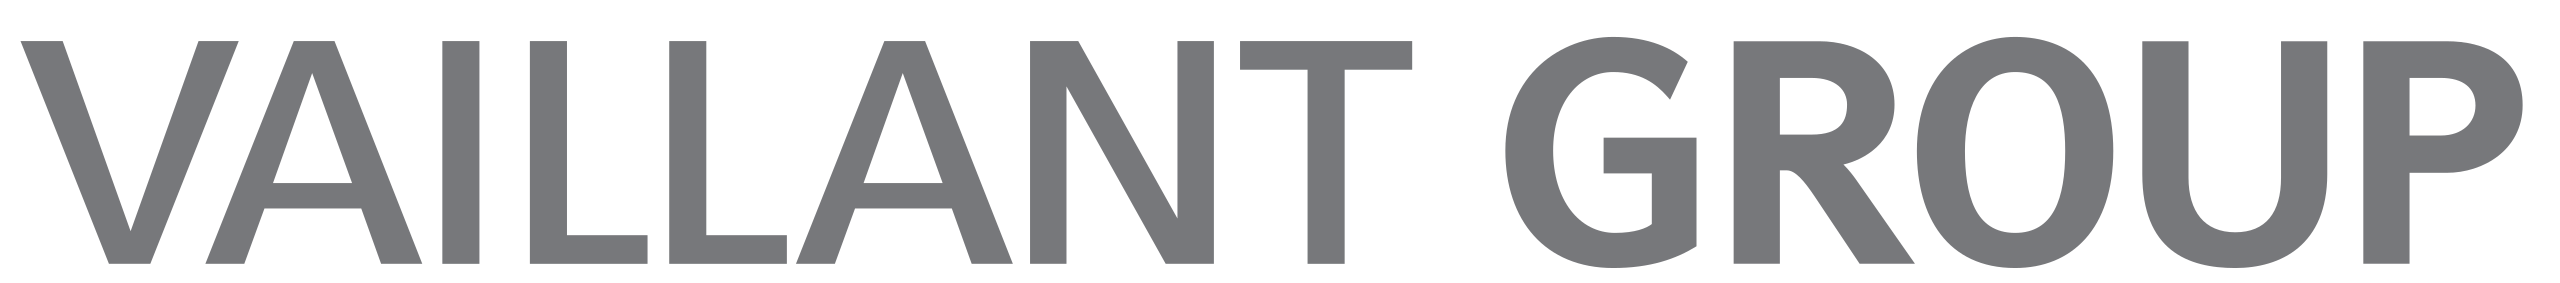 Vaillant-group-logo.png